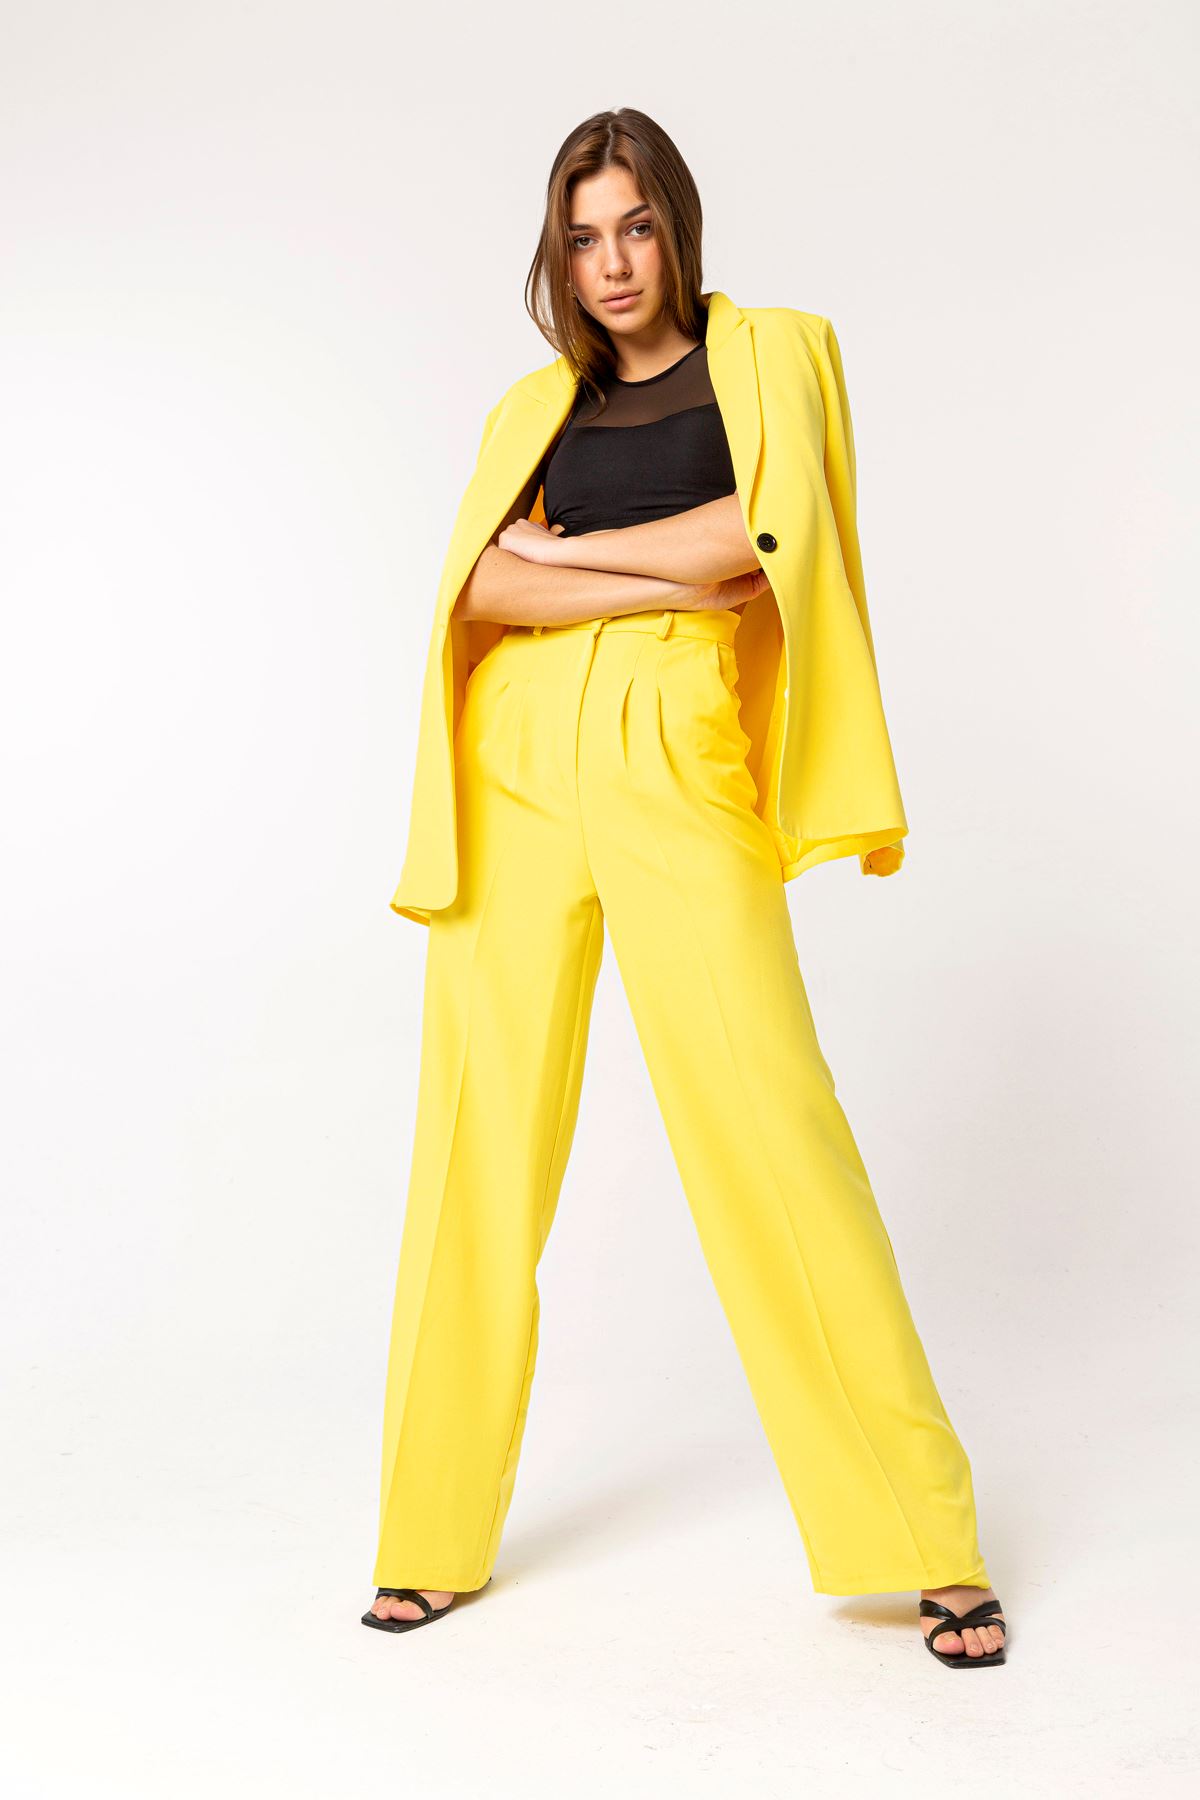 Atlas Fabric Revere Collar Below Hip Classical Single Button Women Jacket - Yellow